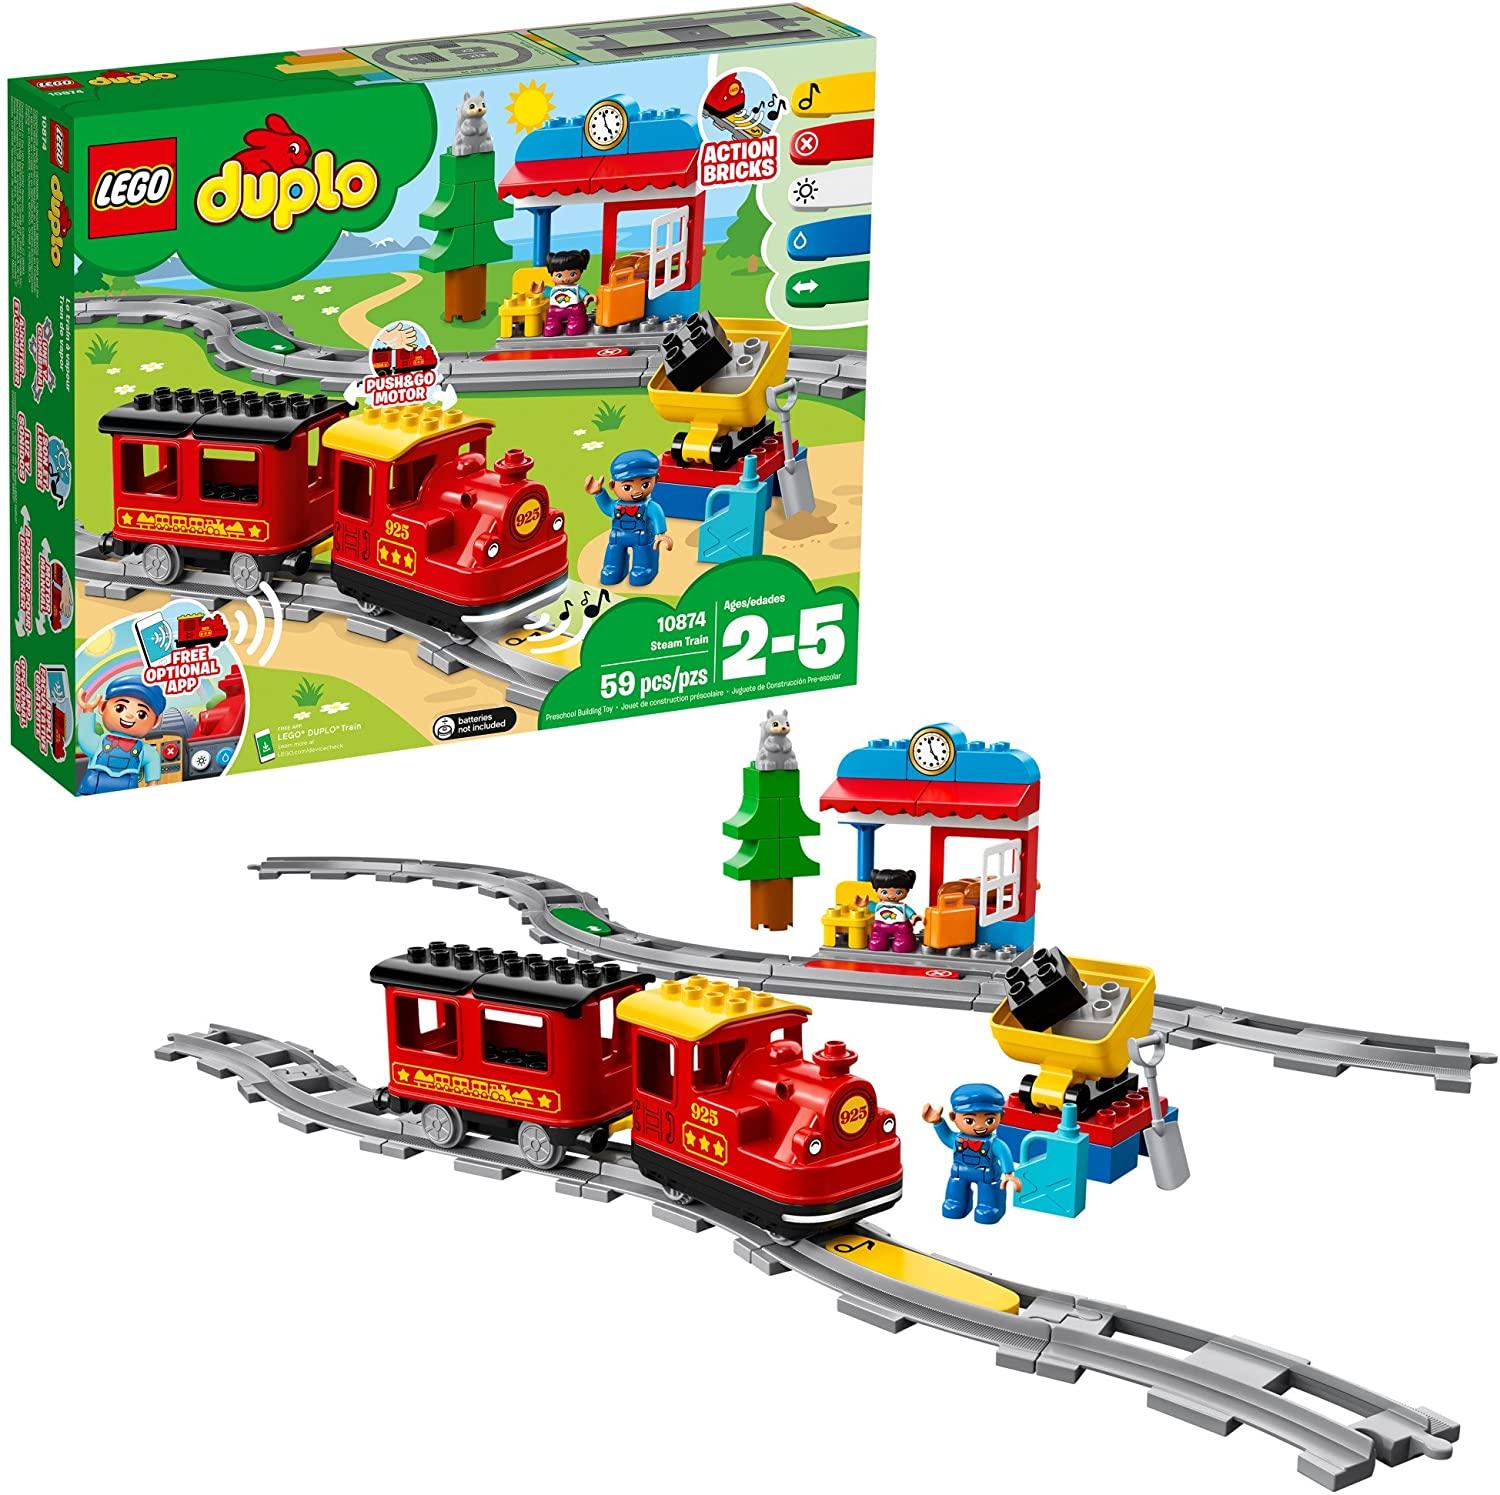 Lego Duplo Steam Train Remote-Control Building Blocks Set for $47.99 Shipped